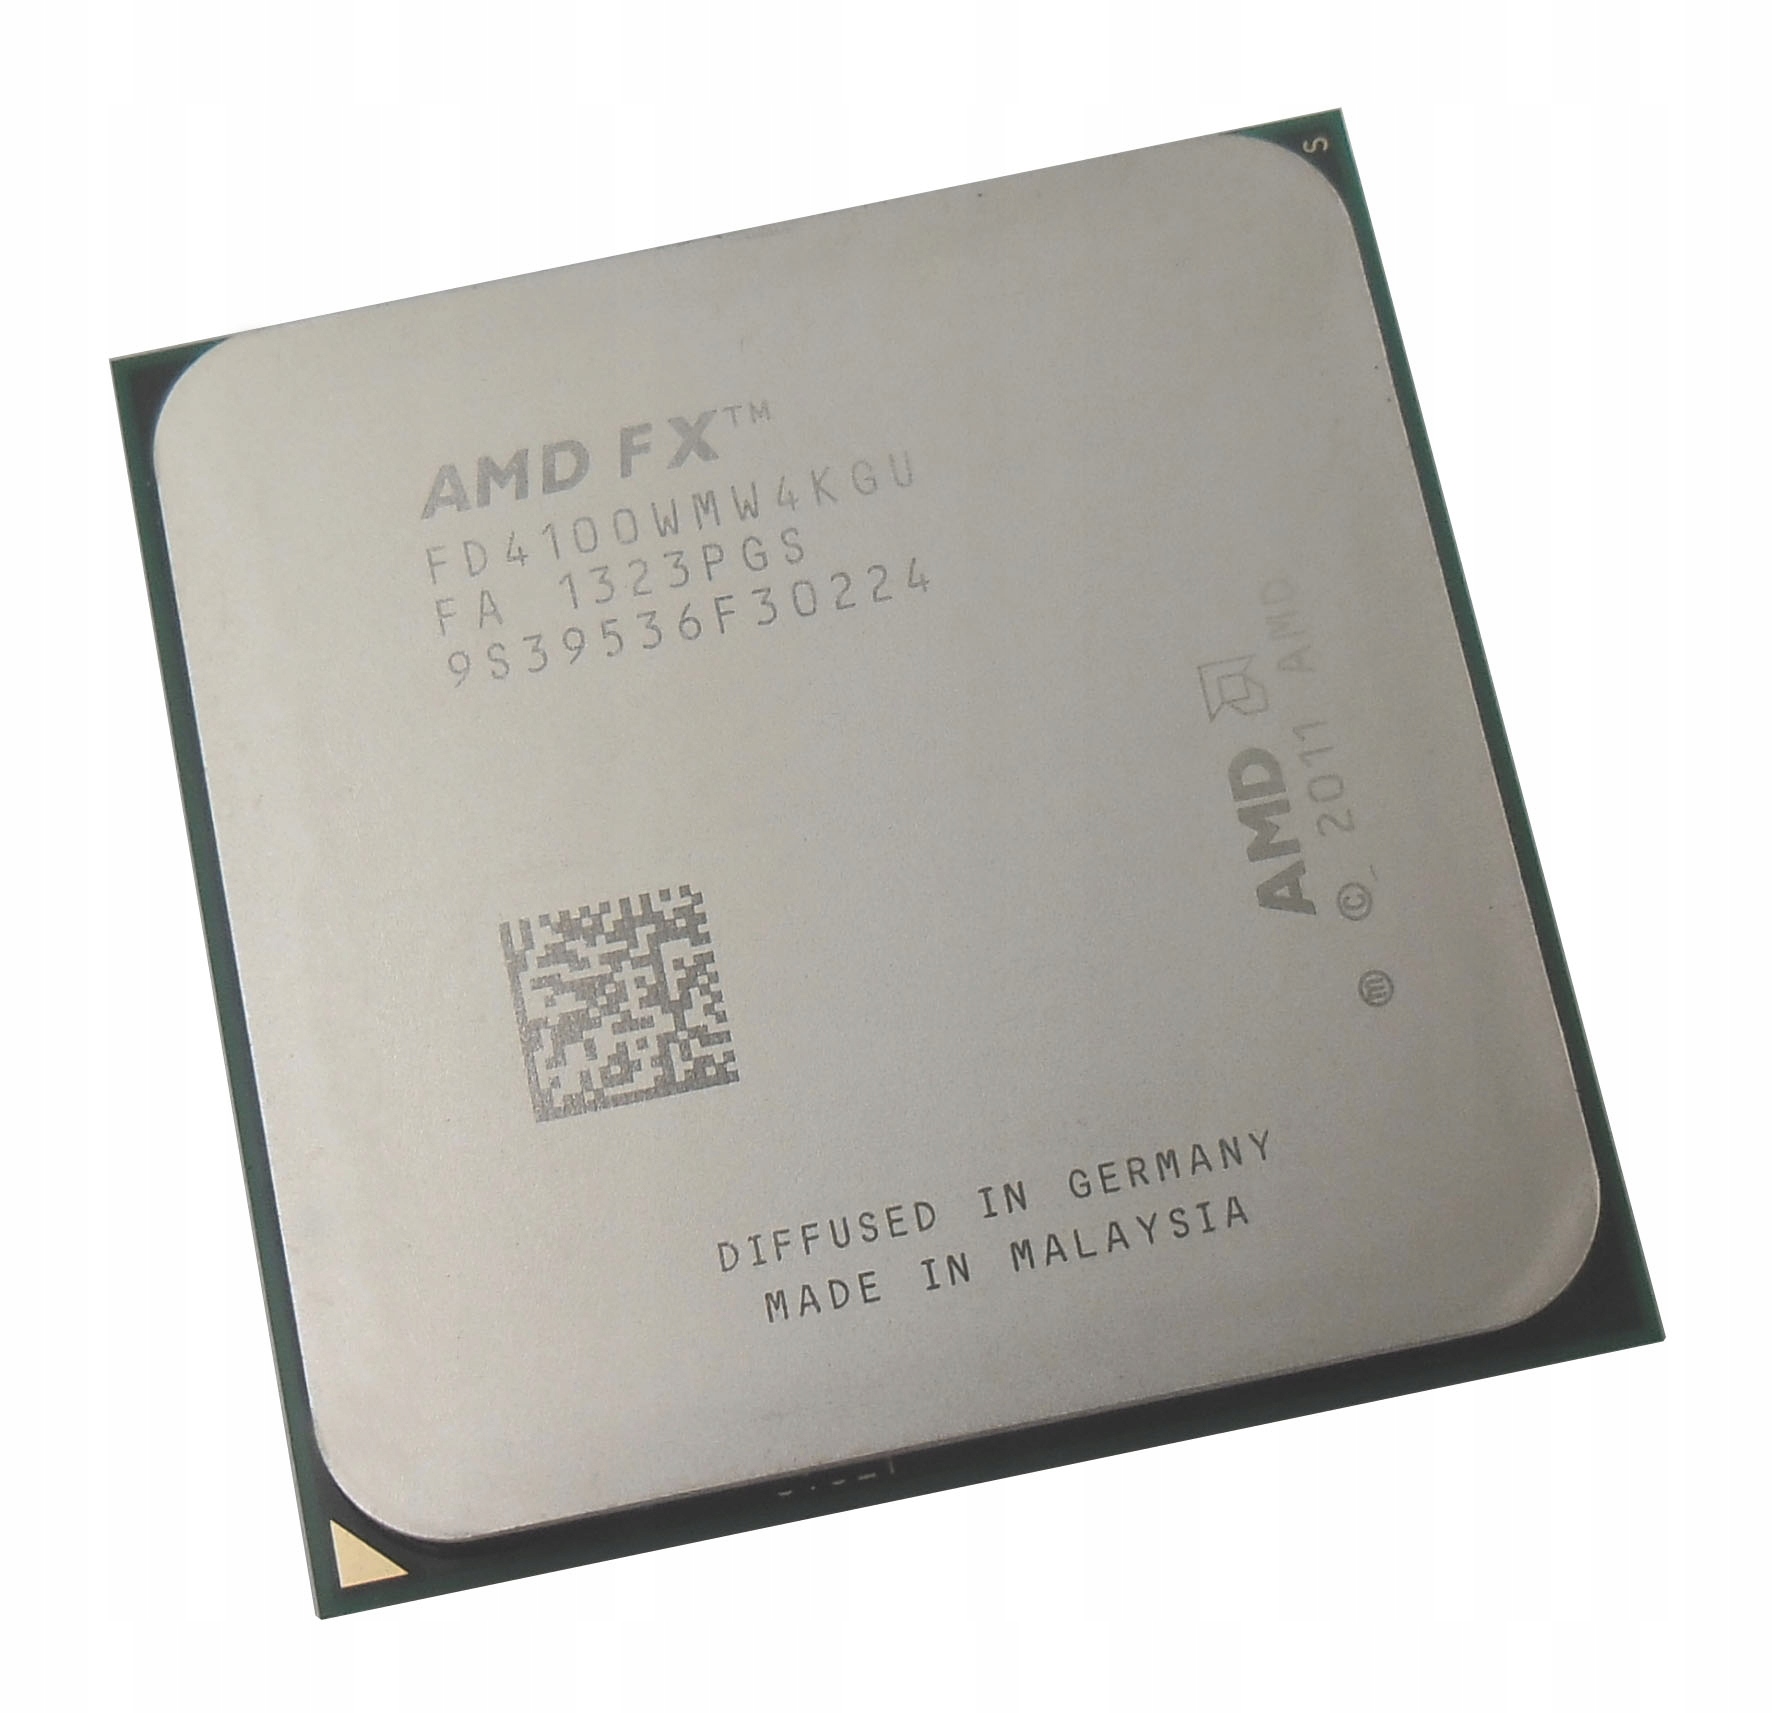 Amd fx память. FX 4100 Quad Core. AMD FX fd4100wmw4kgu. Процессор am3+ FX 4100. Процессор AMD FX(TM)-4100 Quad-Core Processor 3.60 GHZ.